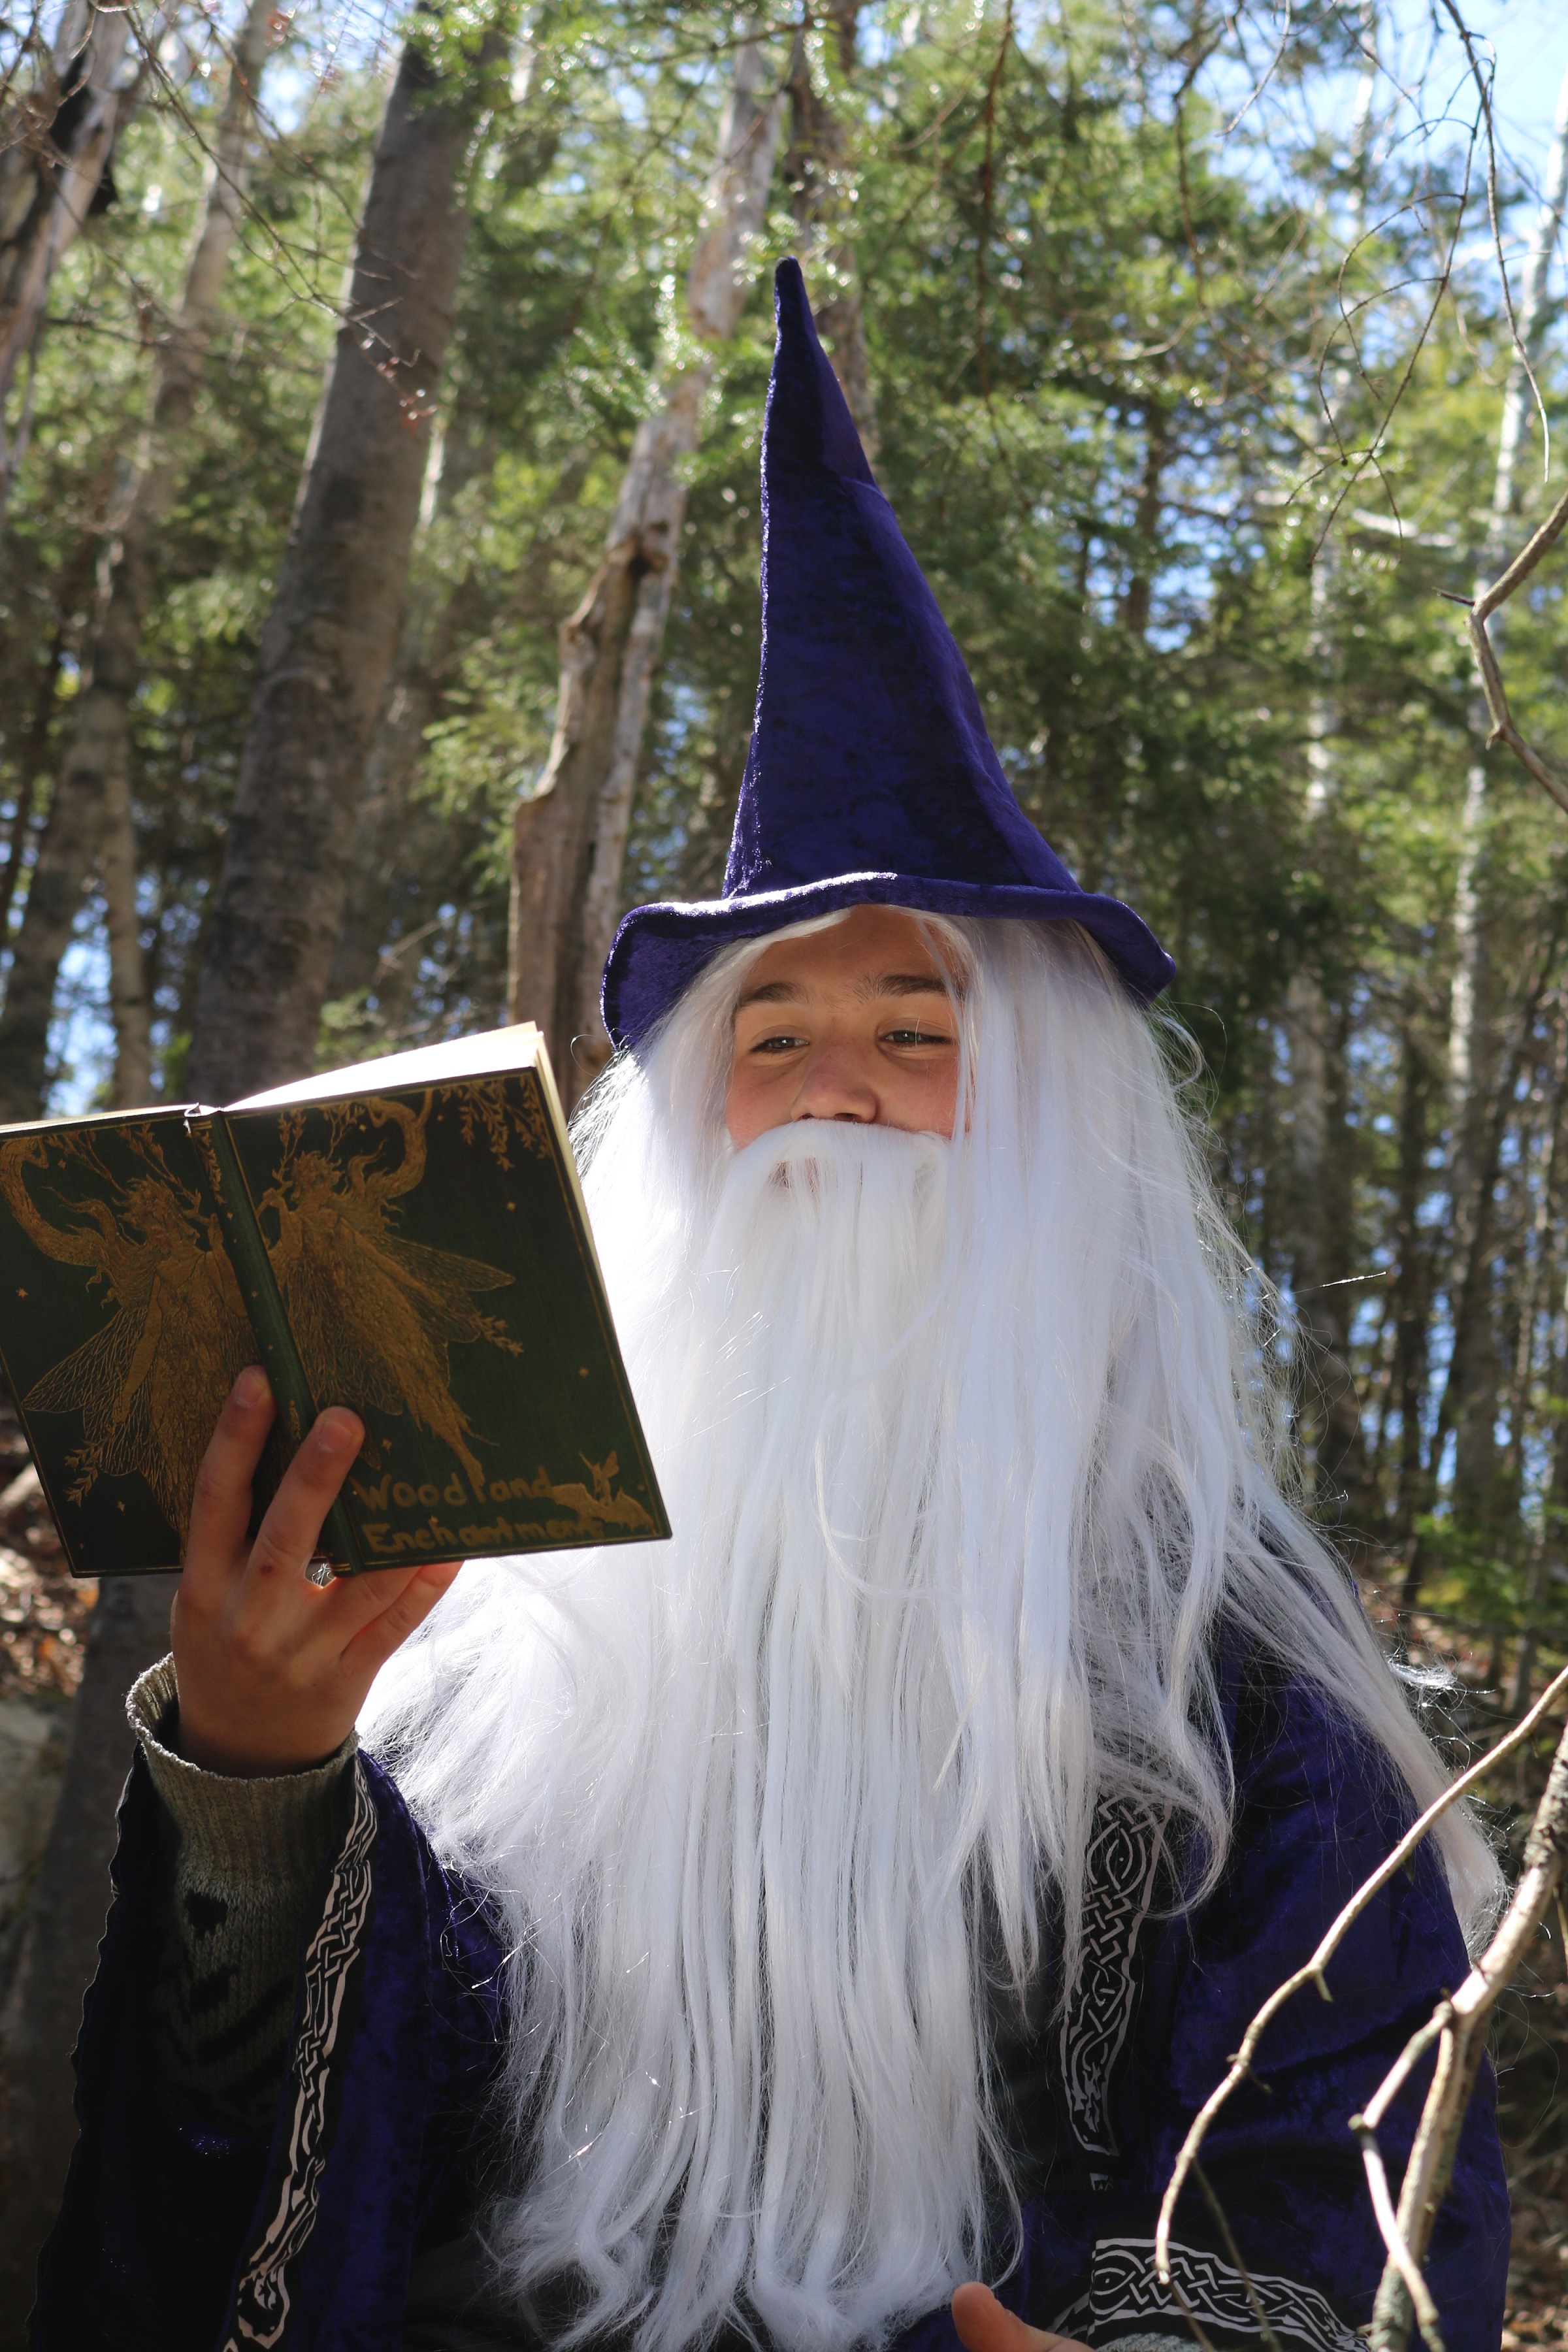 A wizard reading a magic spellbook